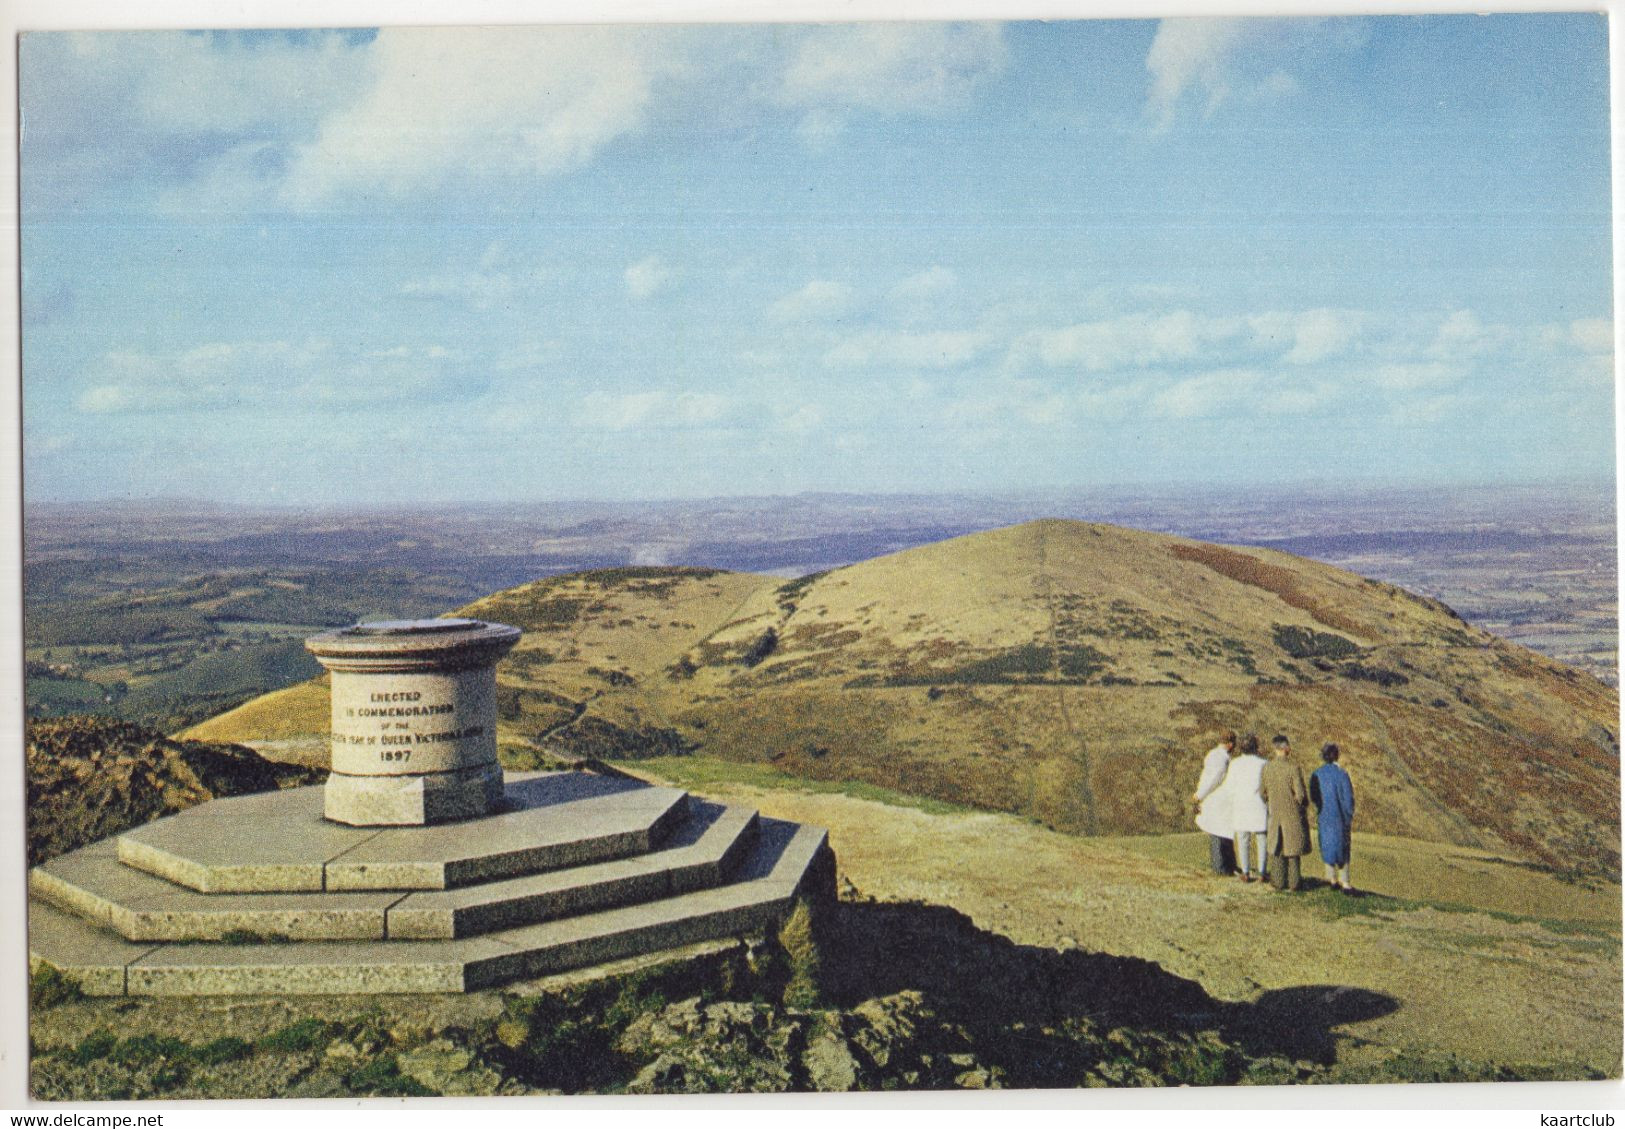 The Summit Of The Worchestershire Beacon, Near Great Malvern - (England) - Malvern